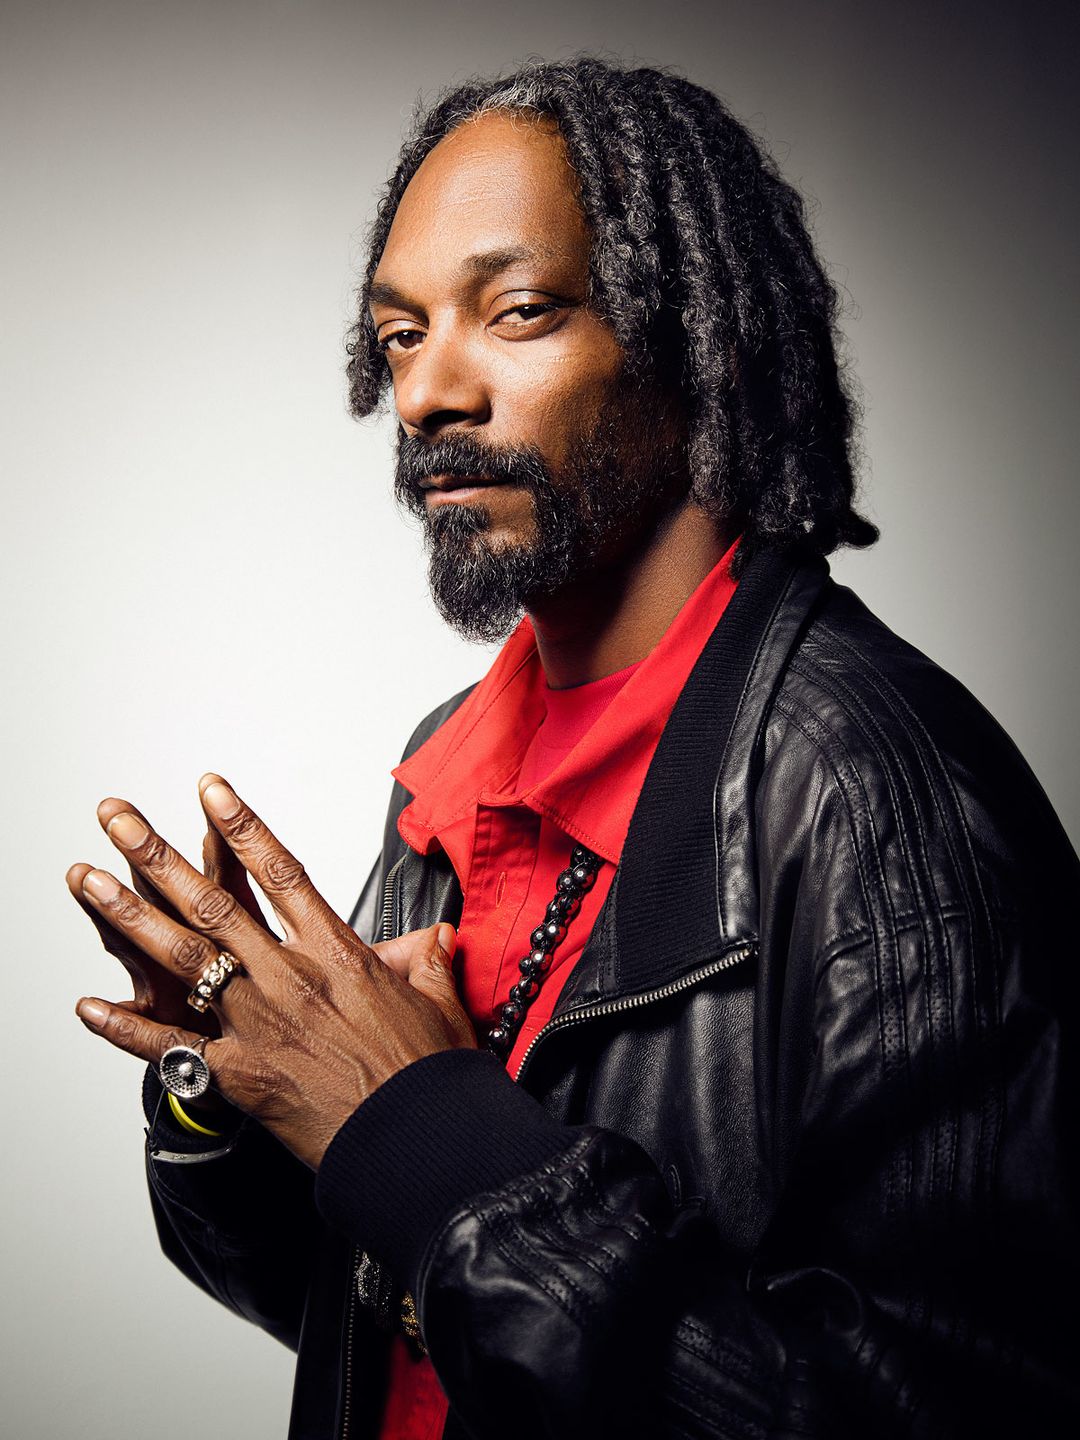 Snoop Dogg life story